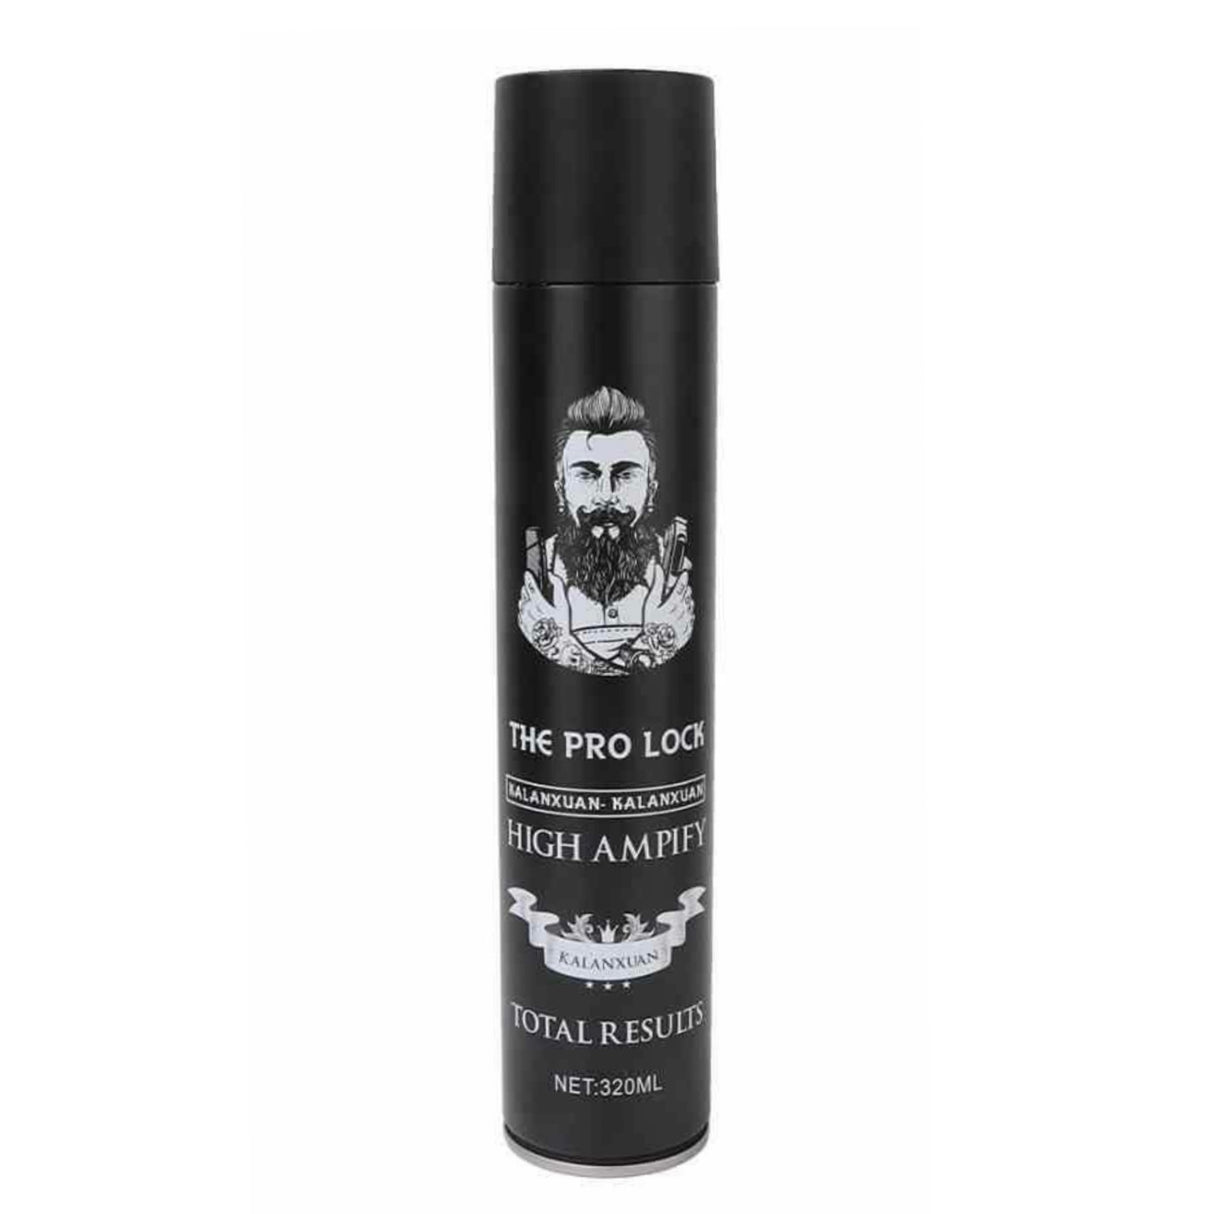 The Pro Lock High Amplify Hair Spray 420ml